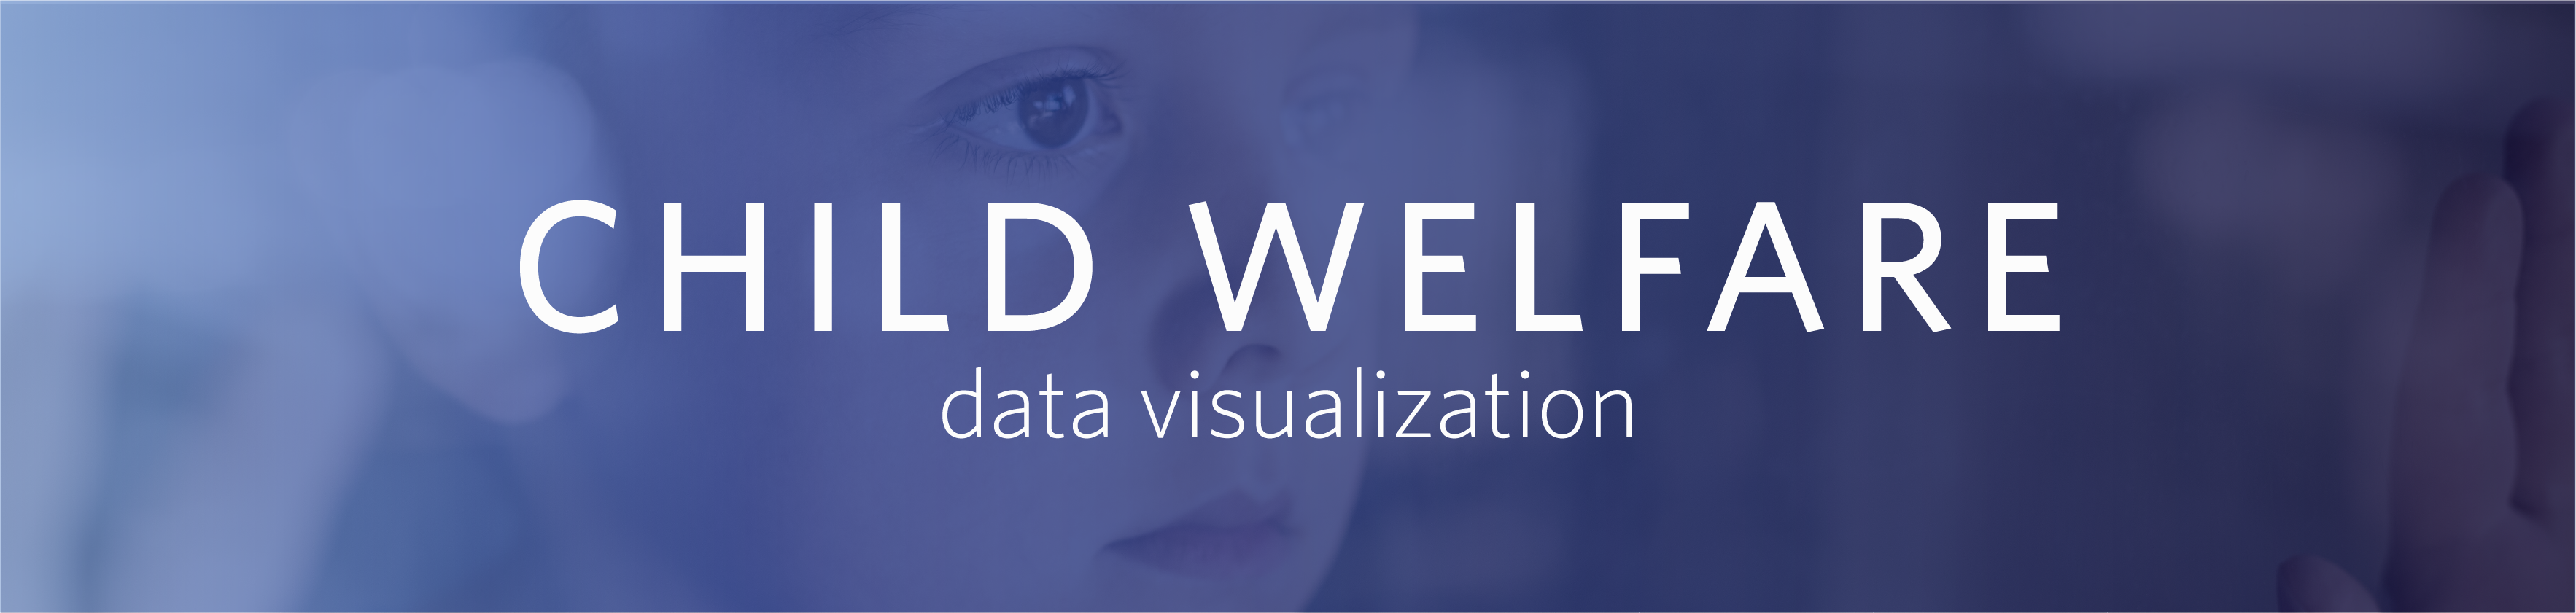 child welfare data viz